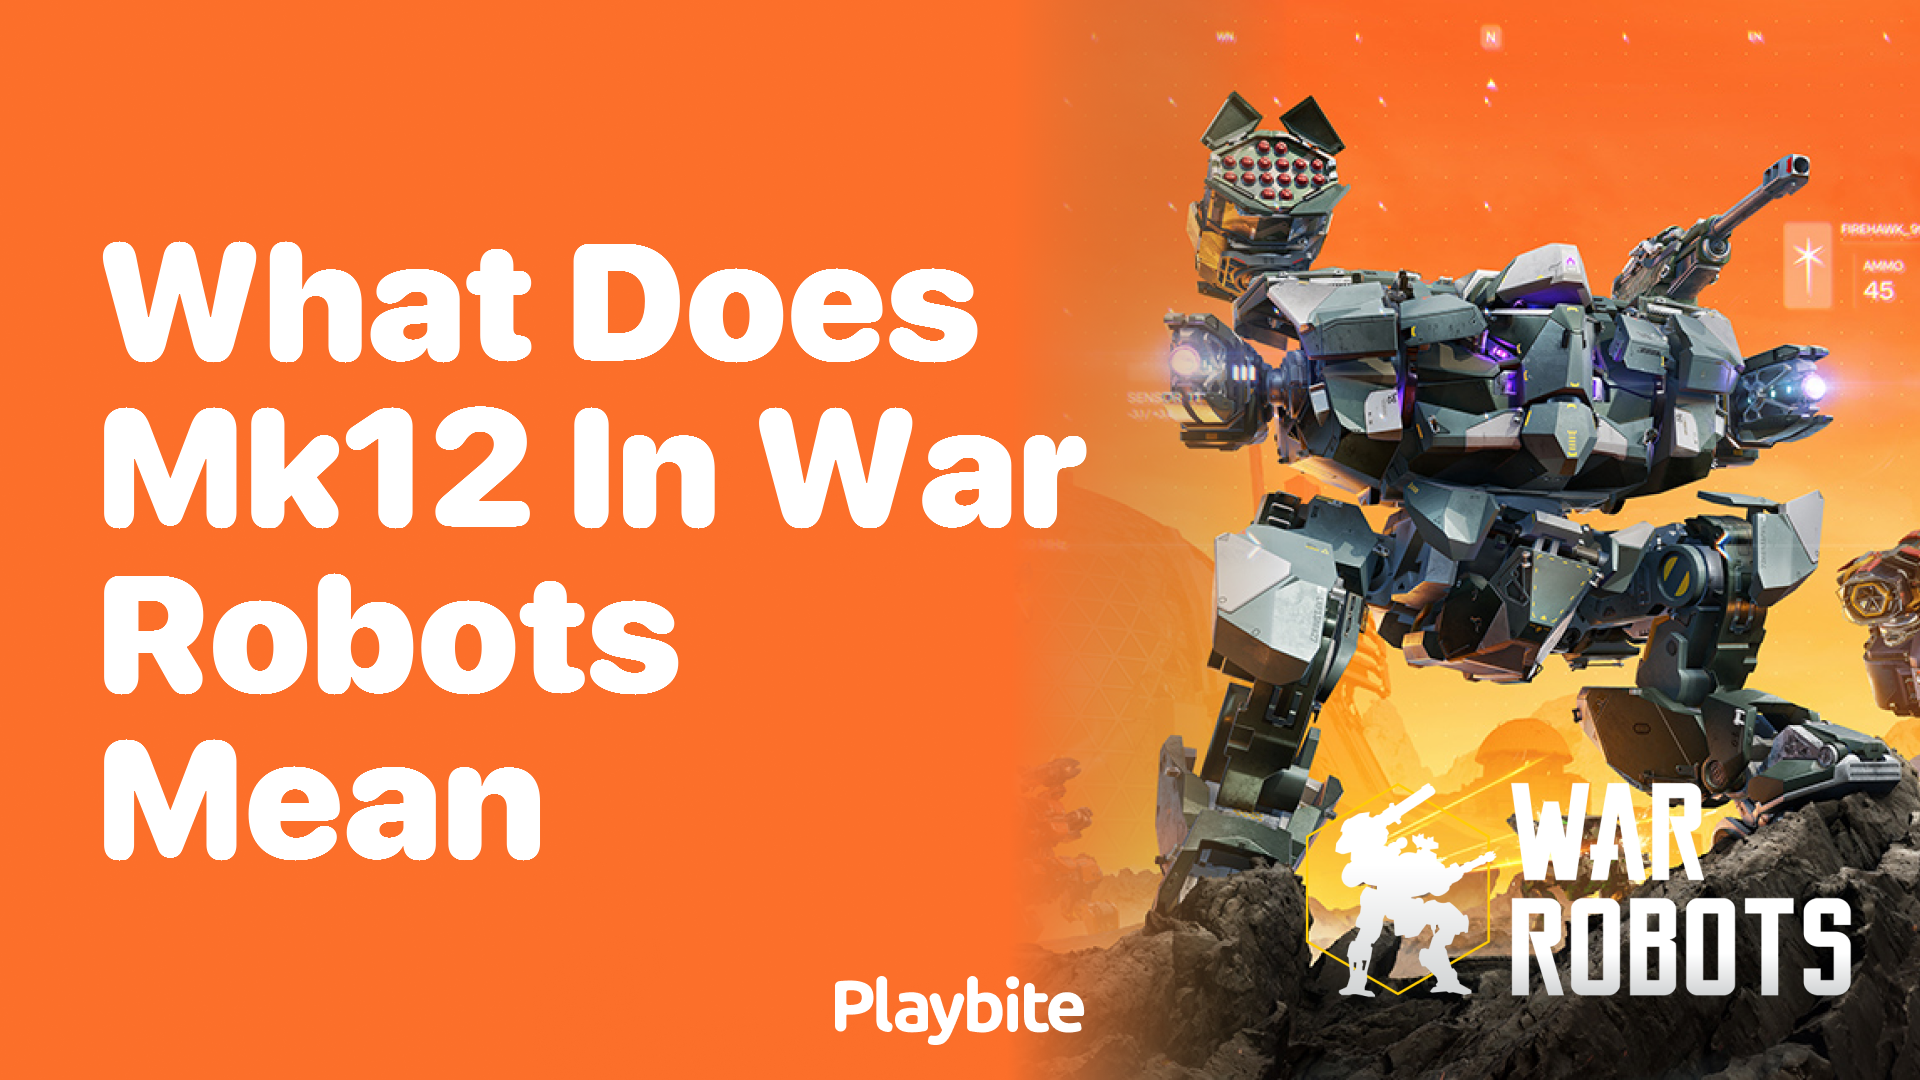 What Does MK12 Mean in War Robots?